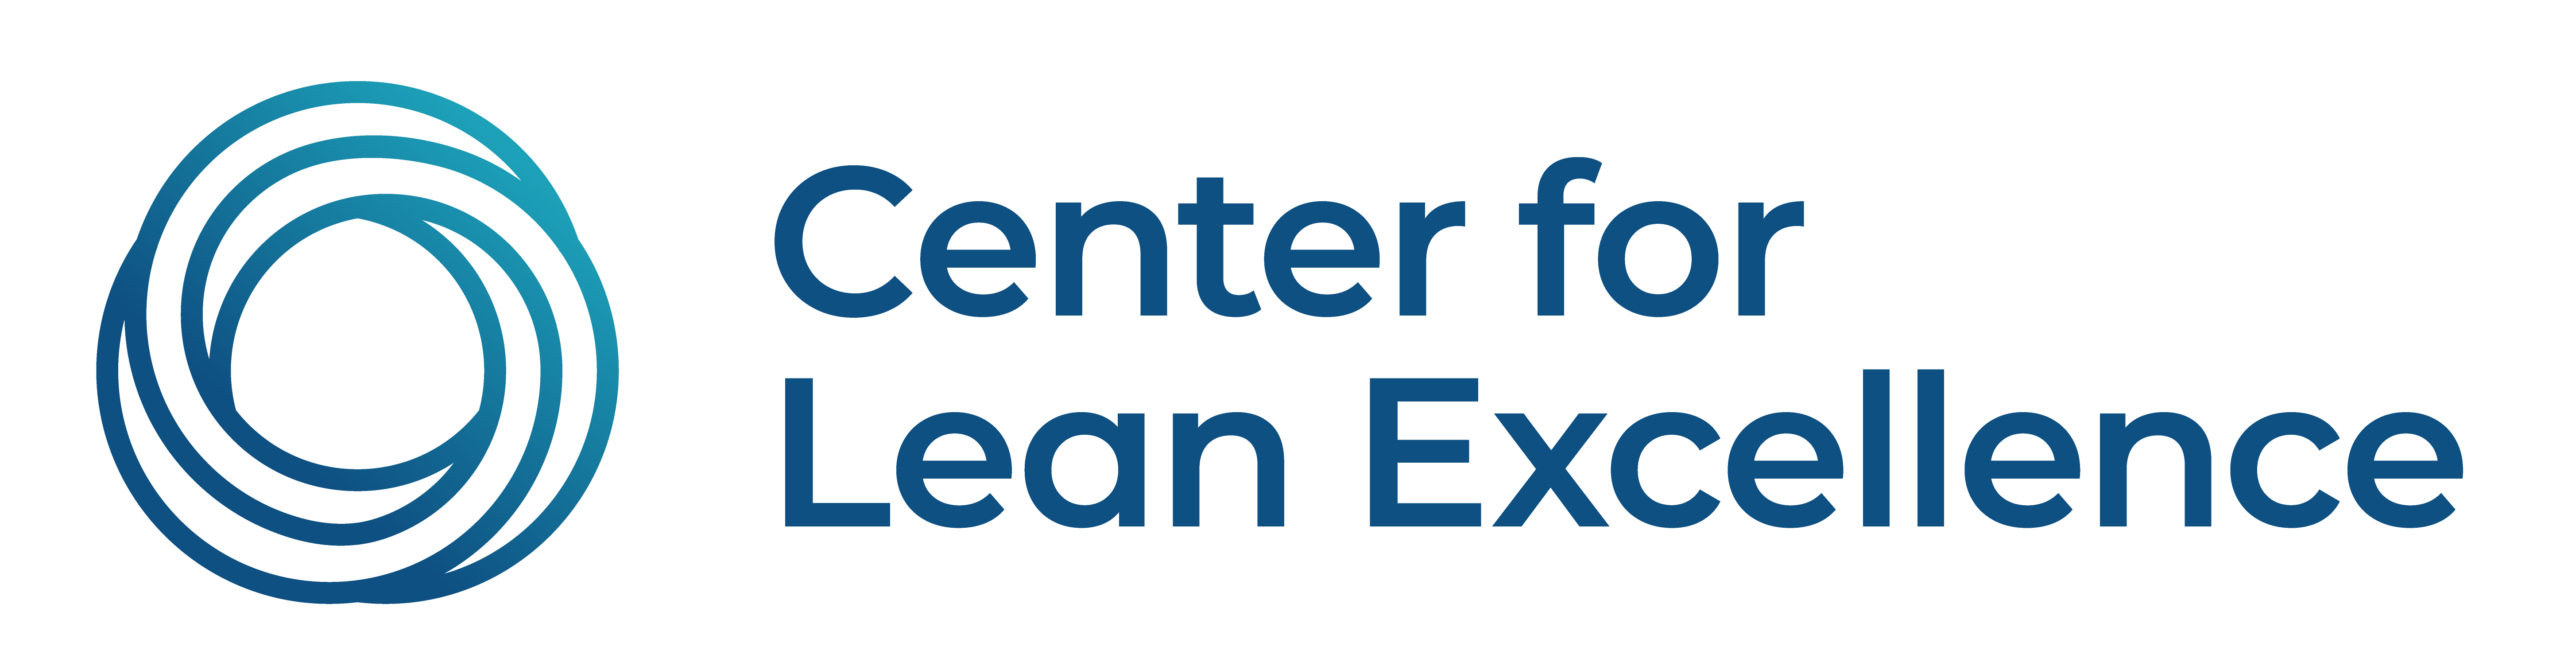 Center for Lean Excellence (Pte) Ltd